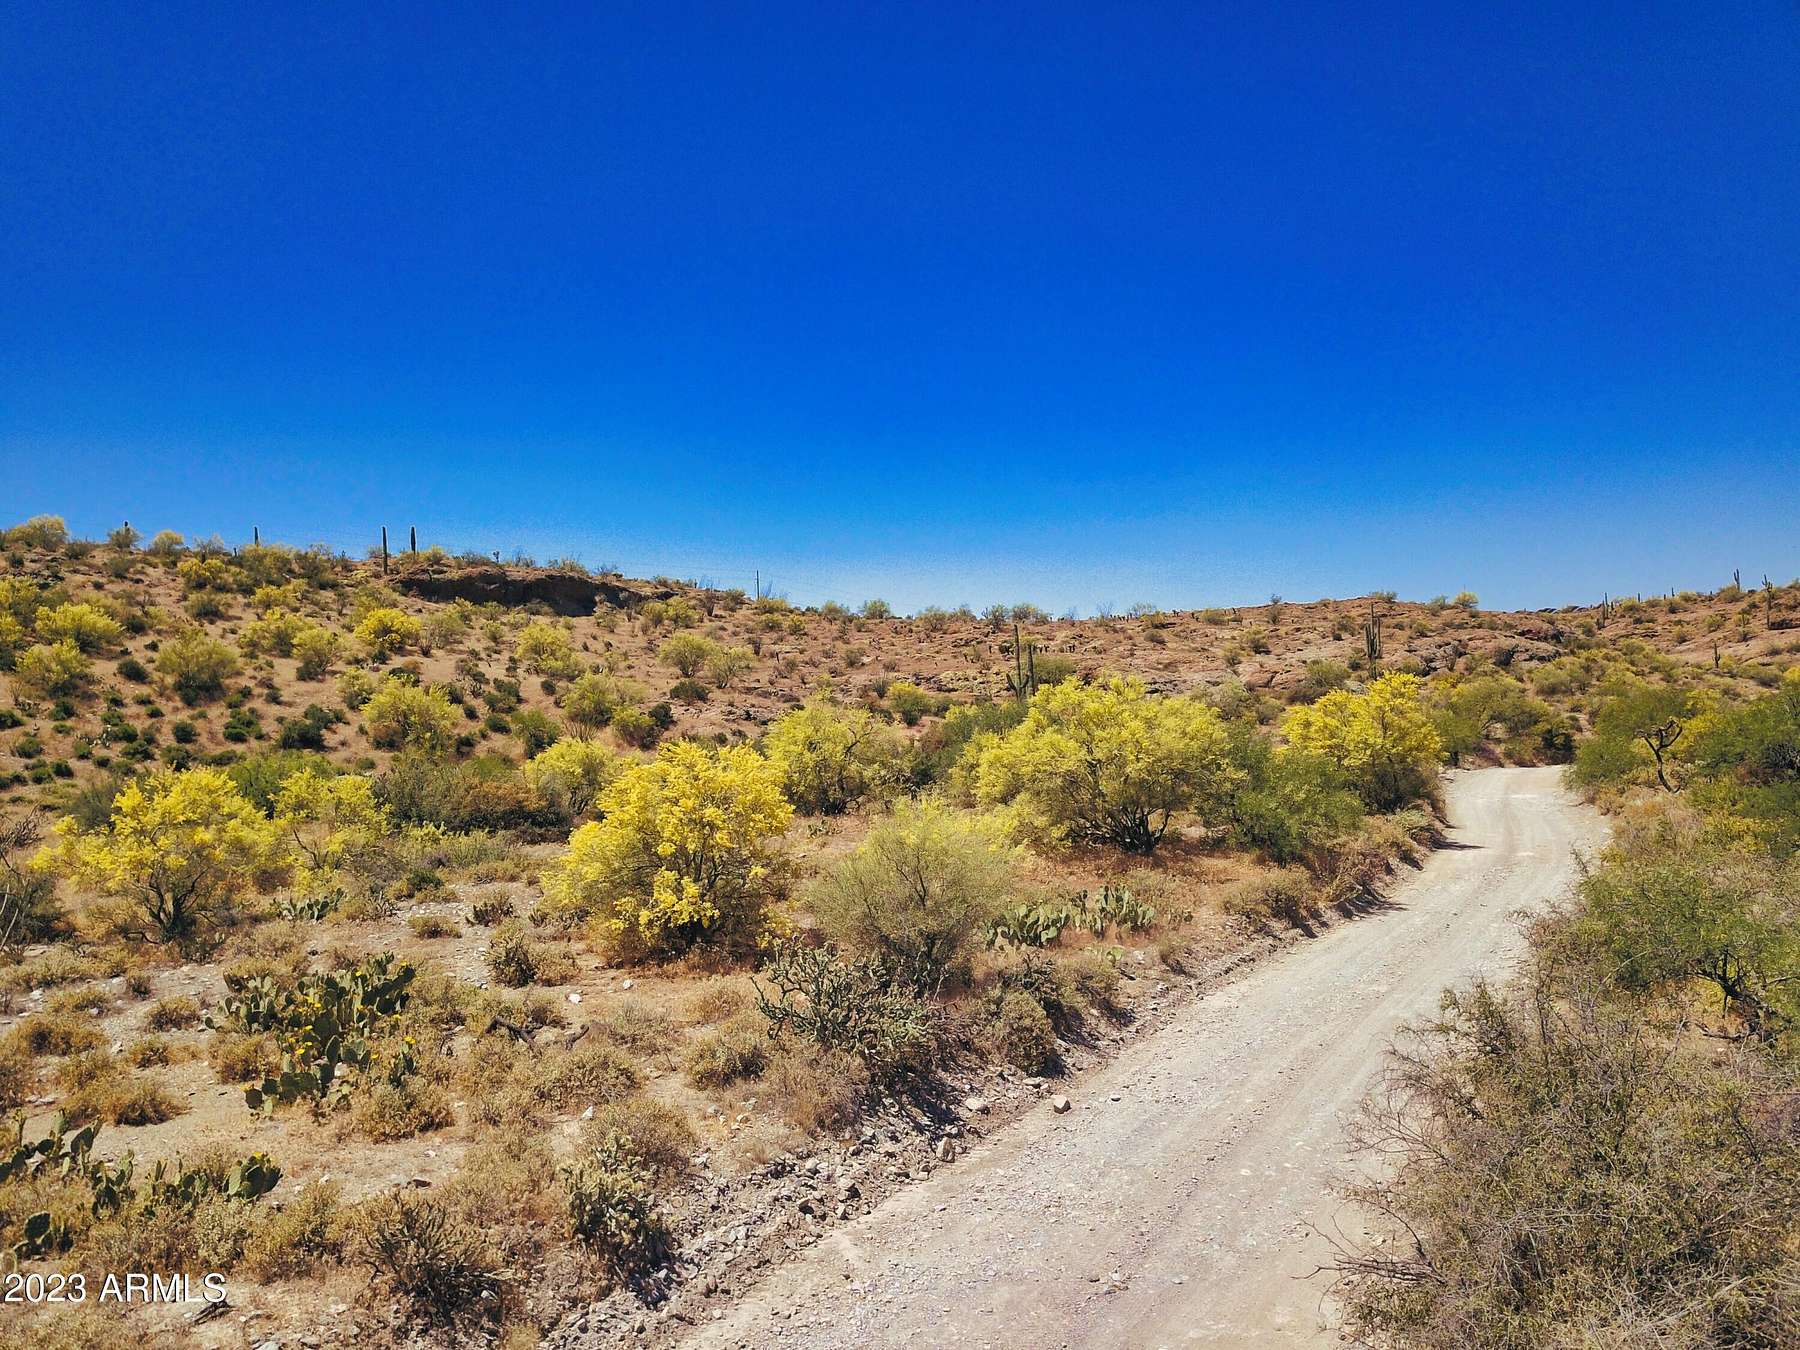 39.9 Acres of Recreational Land for Sale in Queen Valley, Arizona